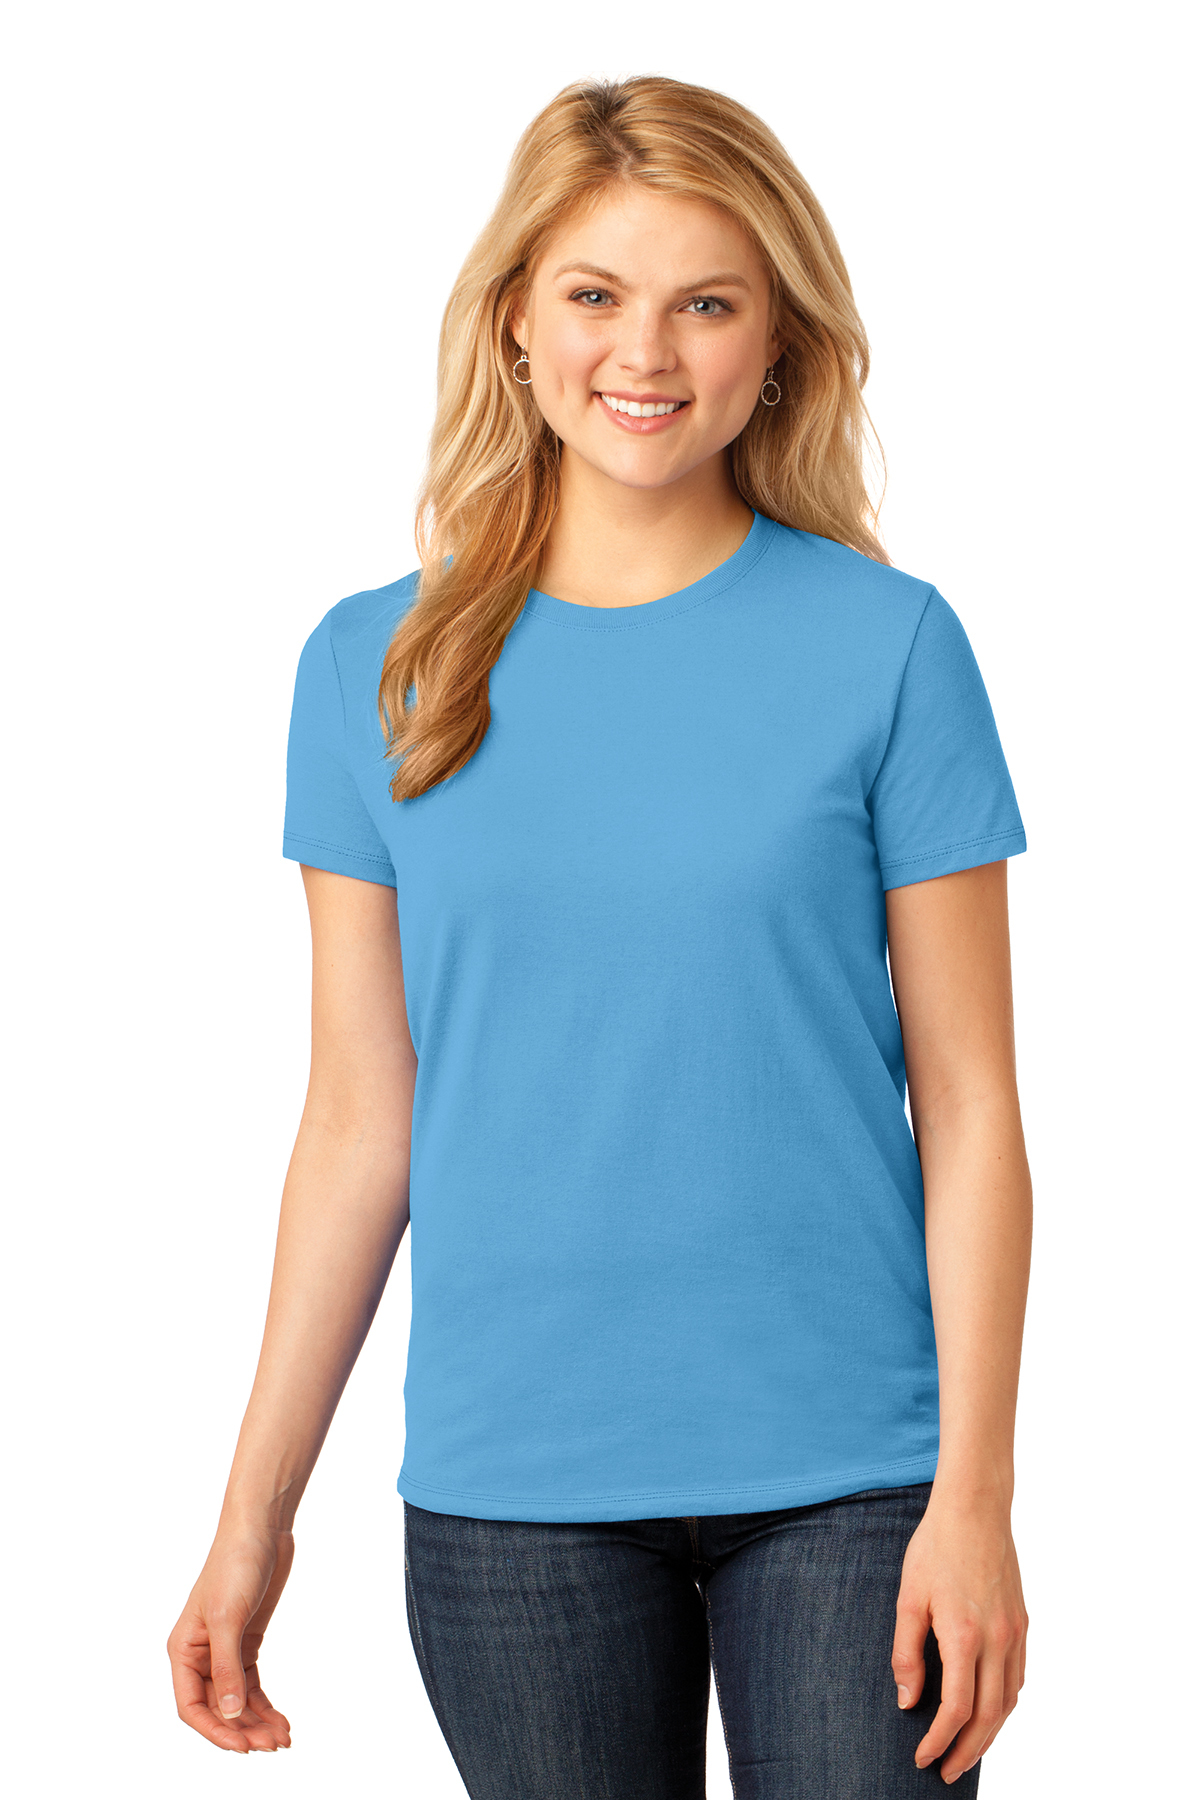 Port & Company LPC54 Ladies 5.4-oz 100% Cotton T-Shirt